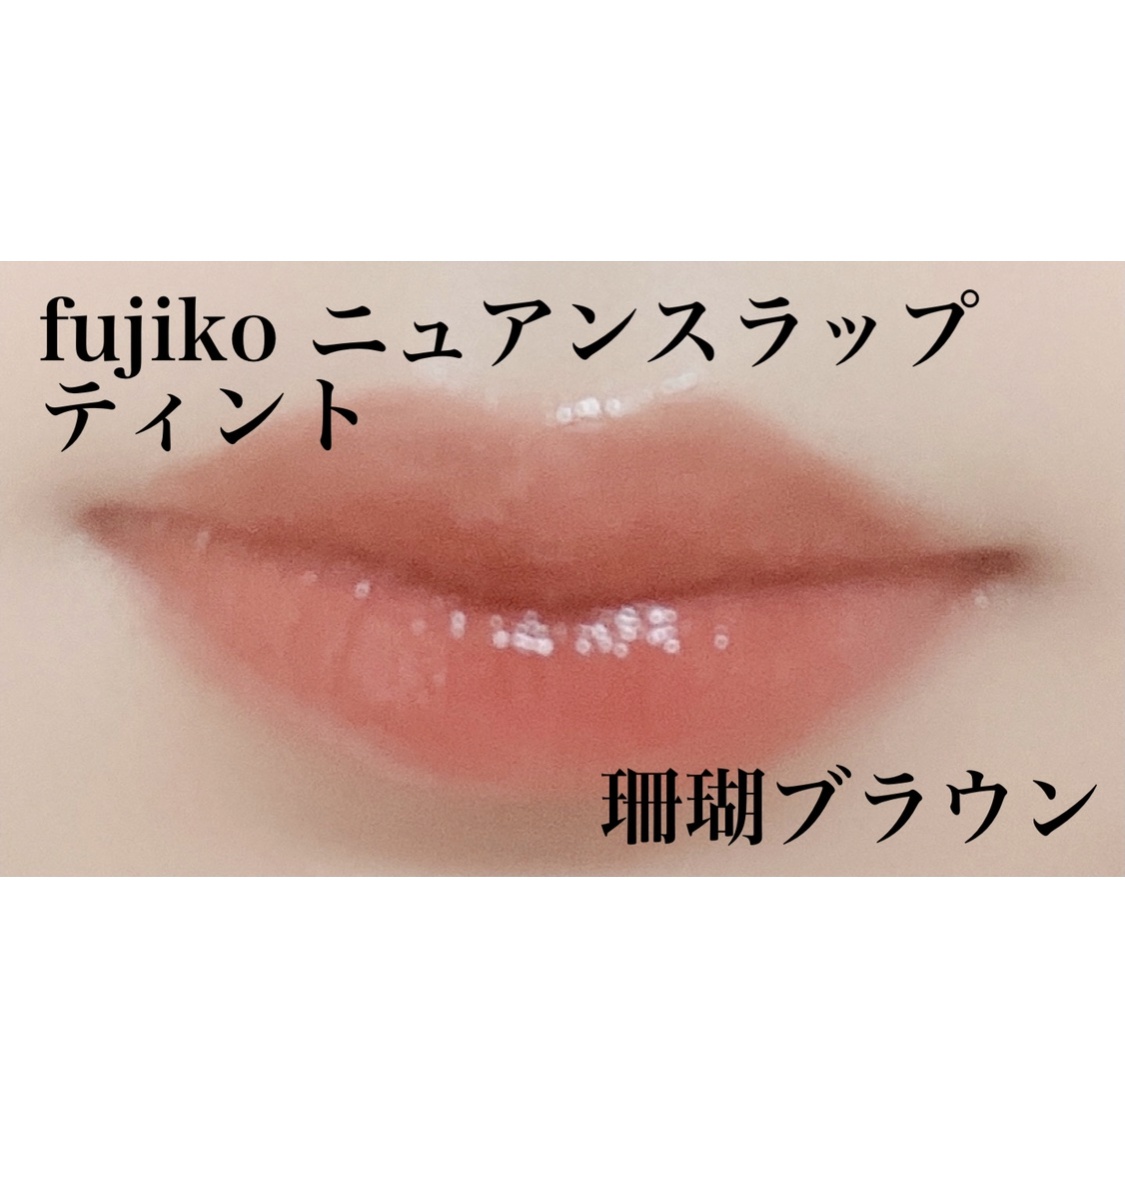 Fujiko(フジコ) ニュアンスラップティントの良い点・メリットに関するなゆさんの口コミ画像1